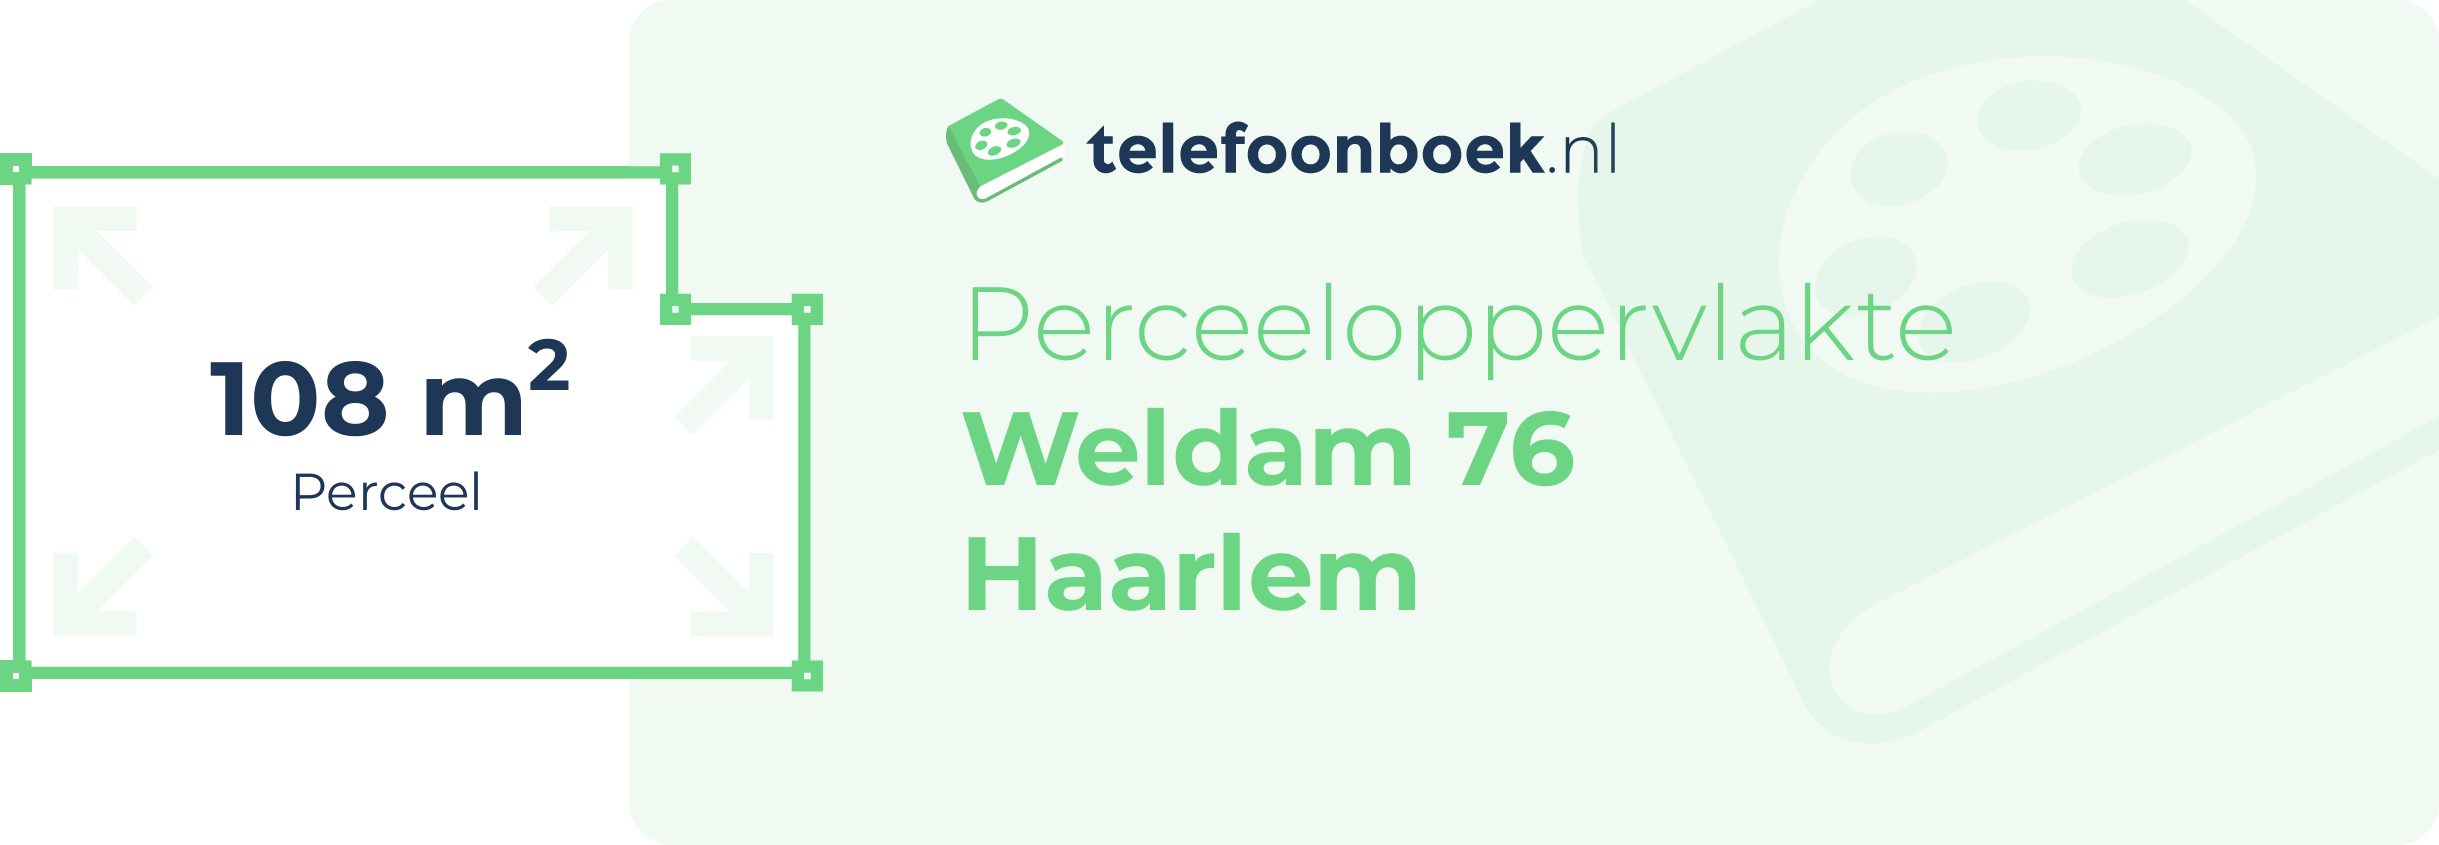 Perceeloppervlakte Weldam 76 Haarlem